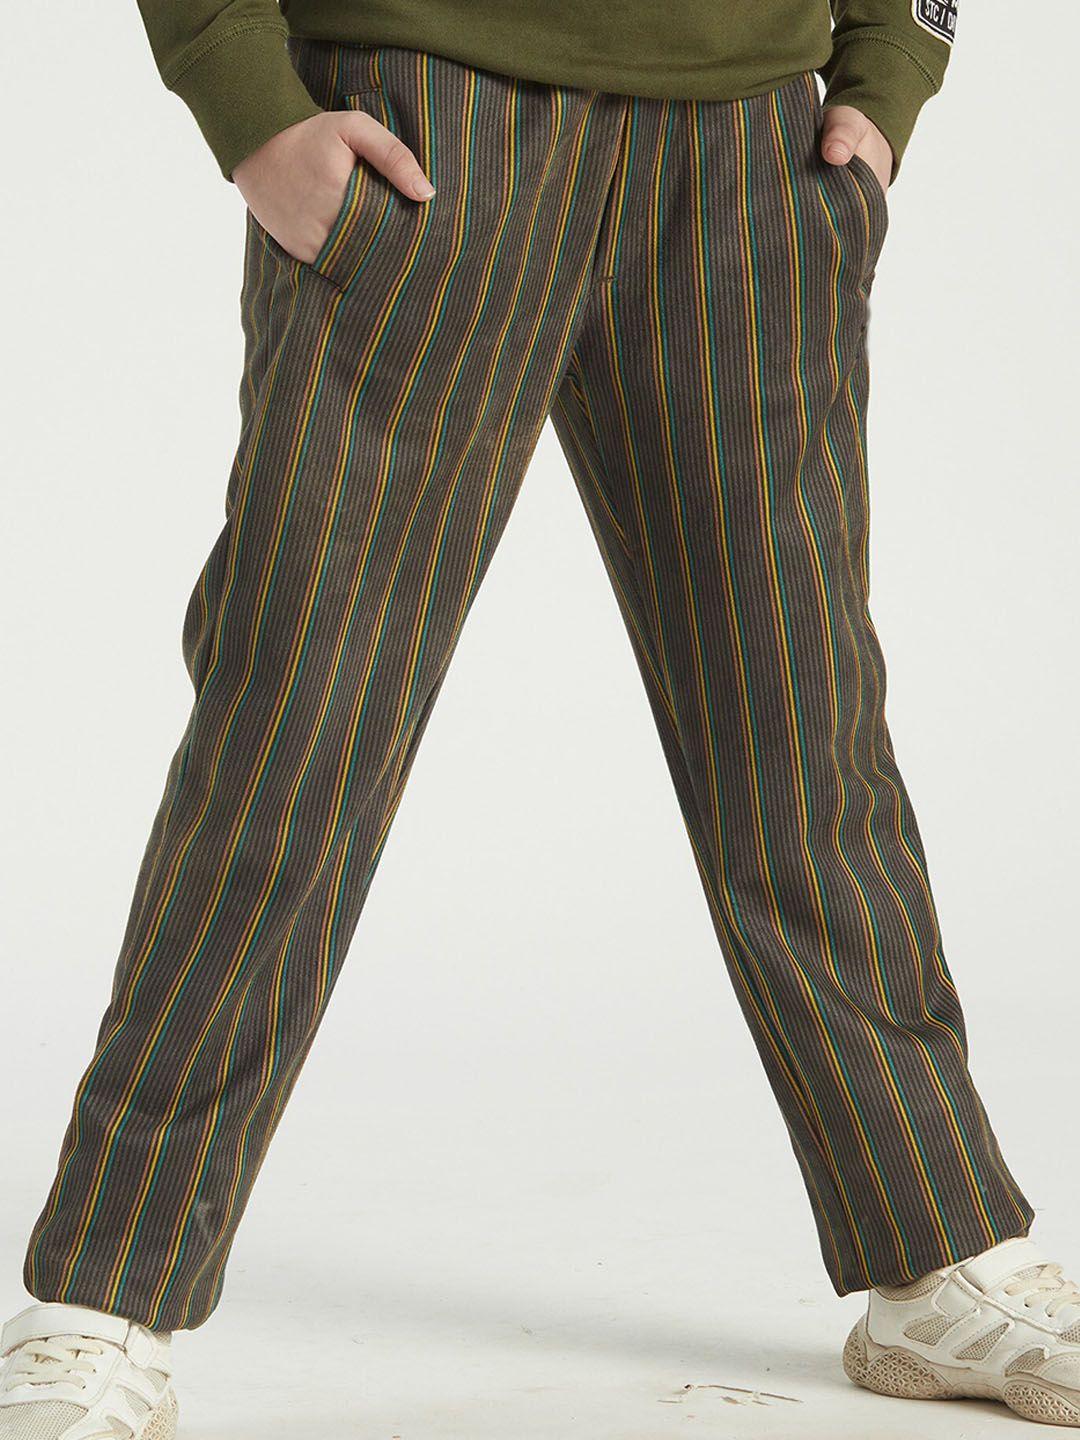 edrio boys striped cotton track pants